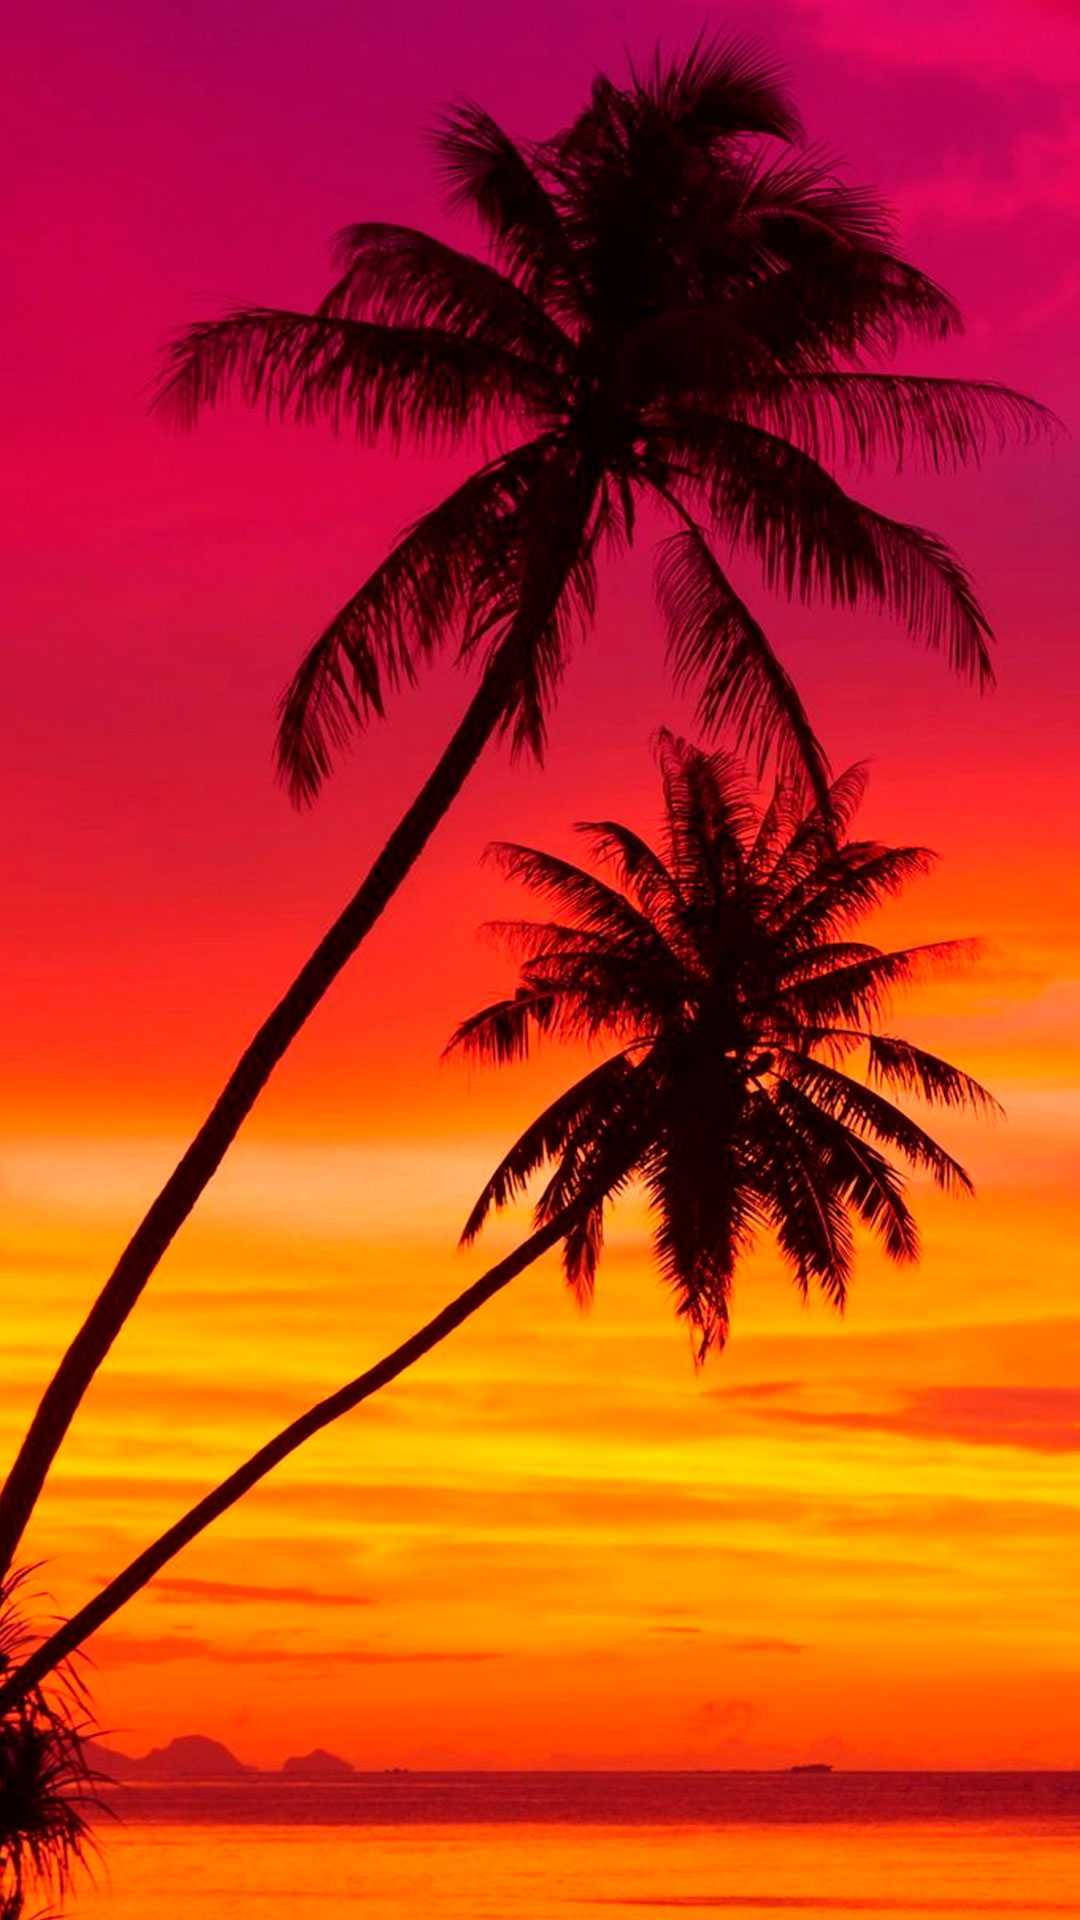 Scenic Sunset Iphone Screensaver Wallpaper